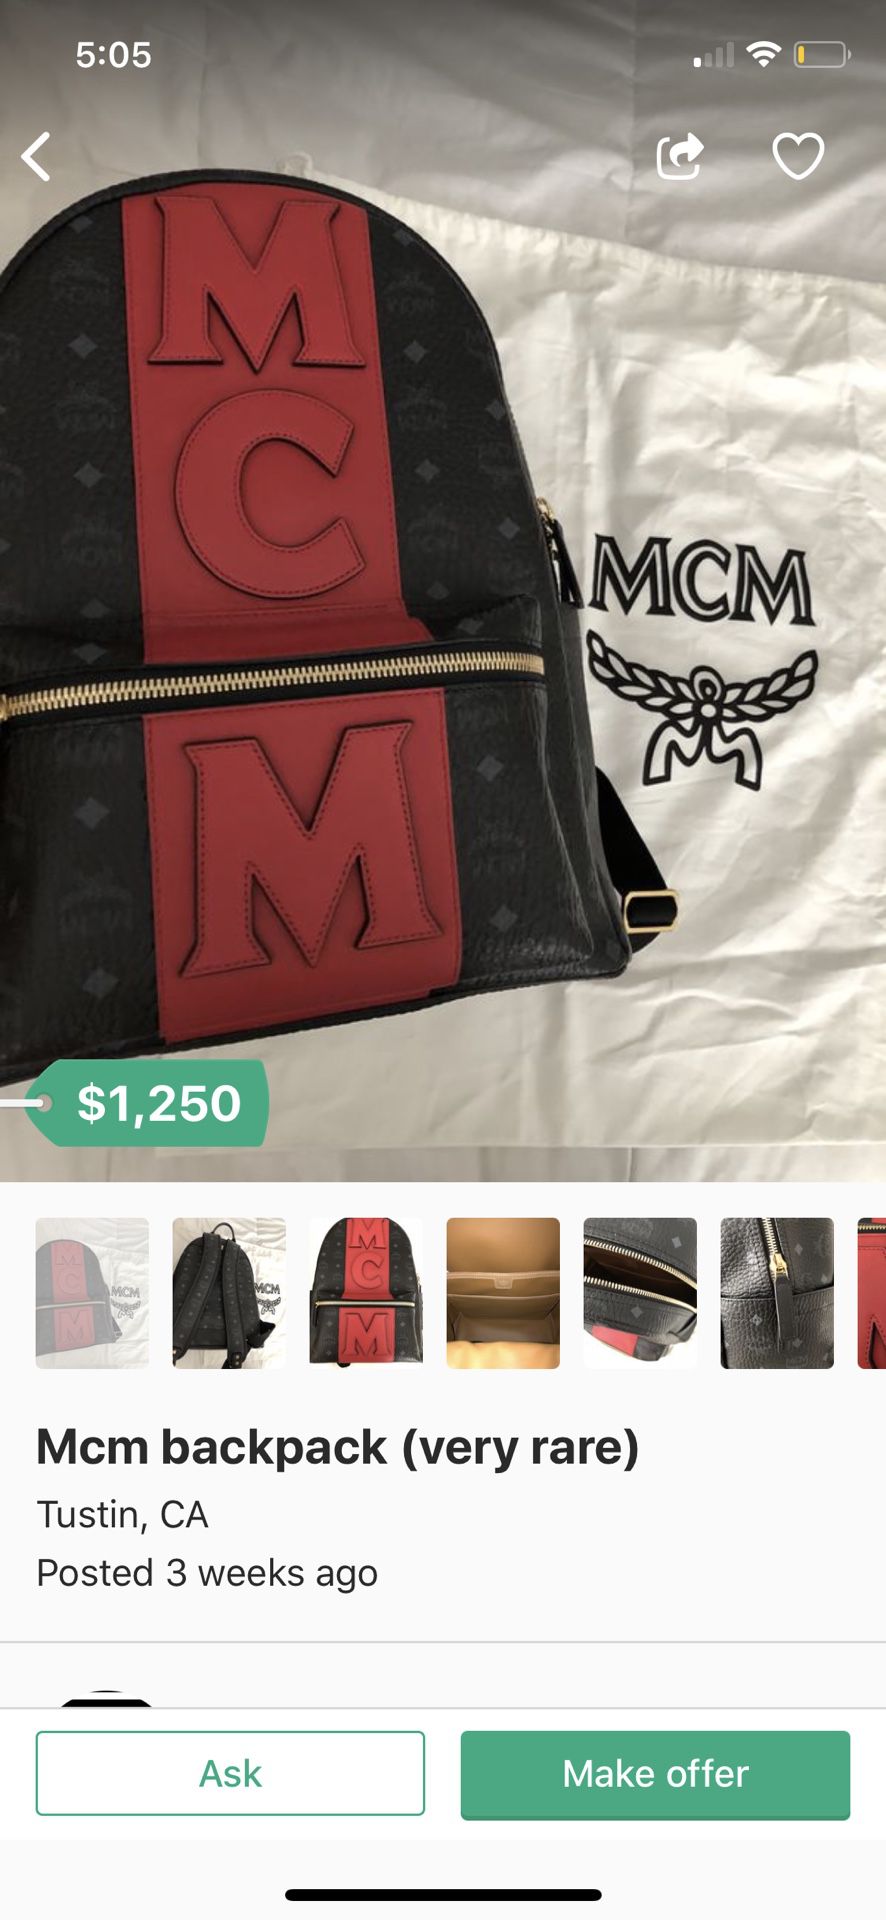 Authentic MCM Fursten Belt Bag for Sale in Seal Beach, CA - OfferUp